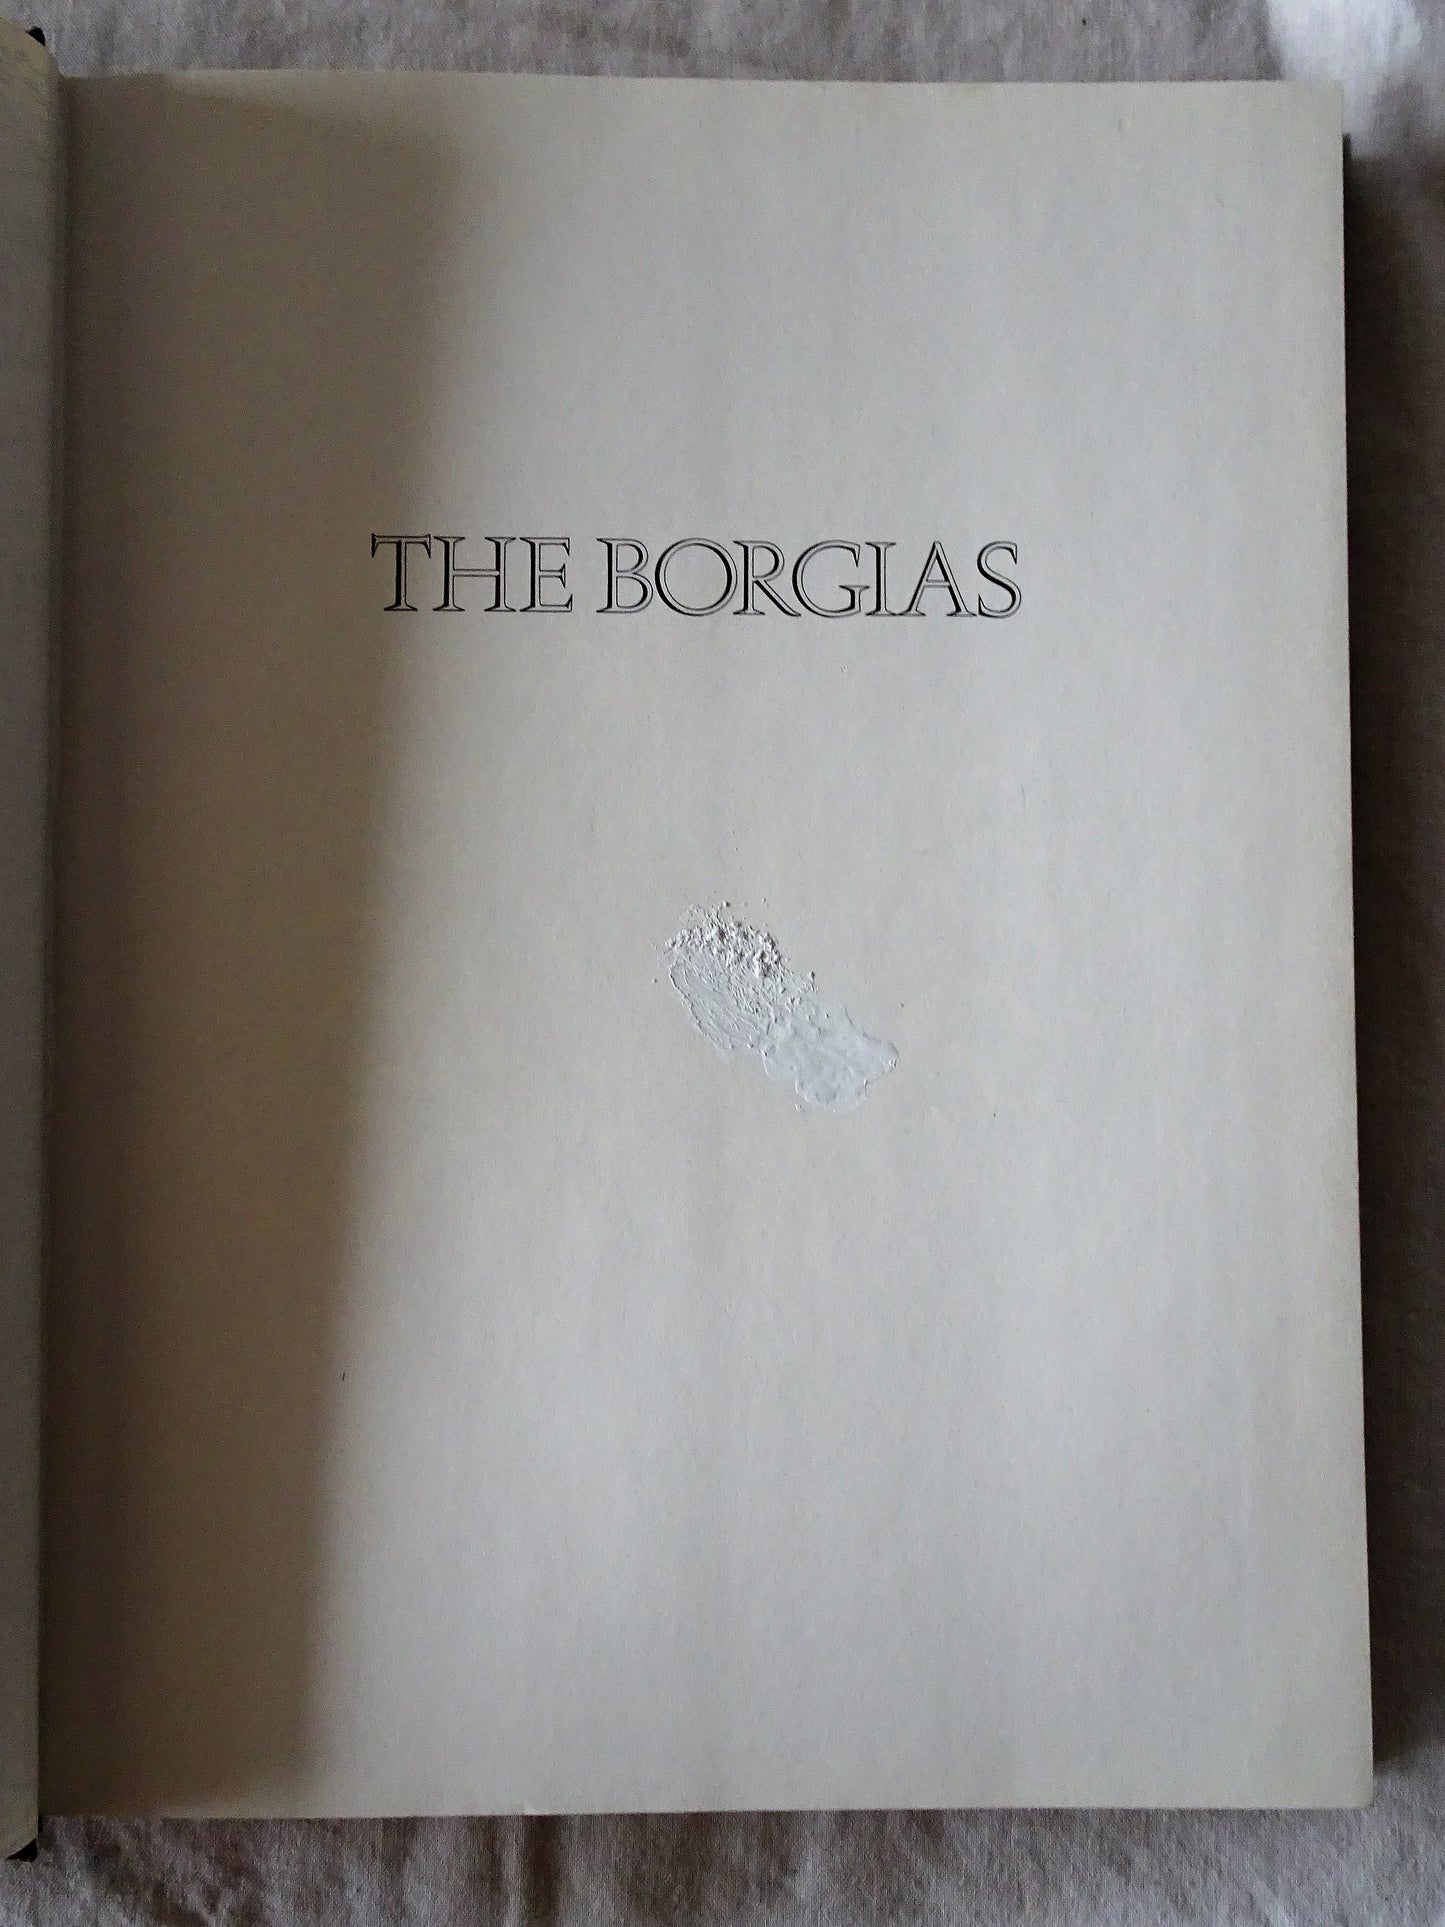 The Borgias by Marion Johnson